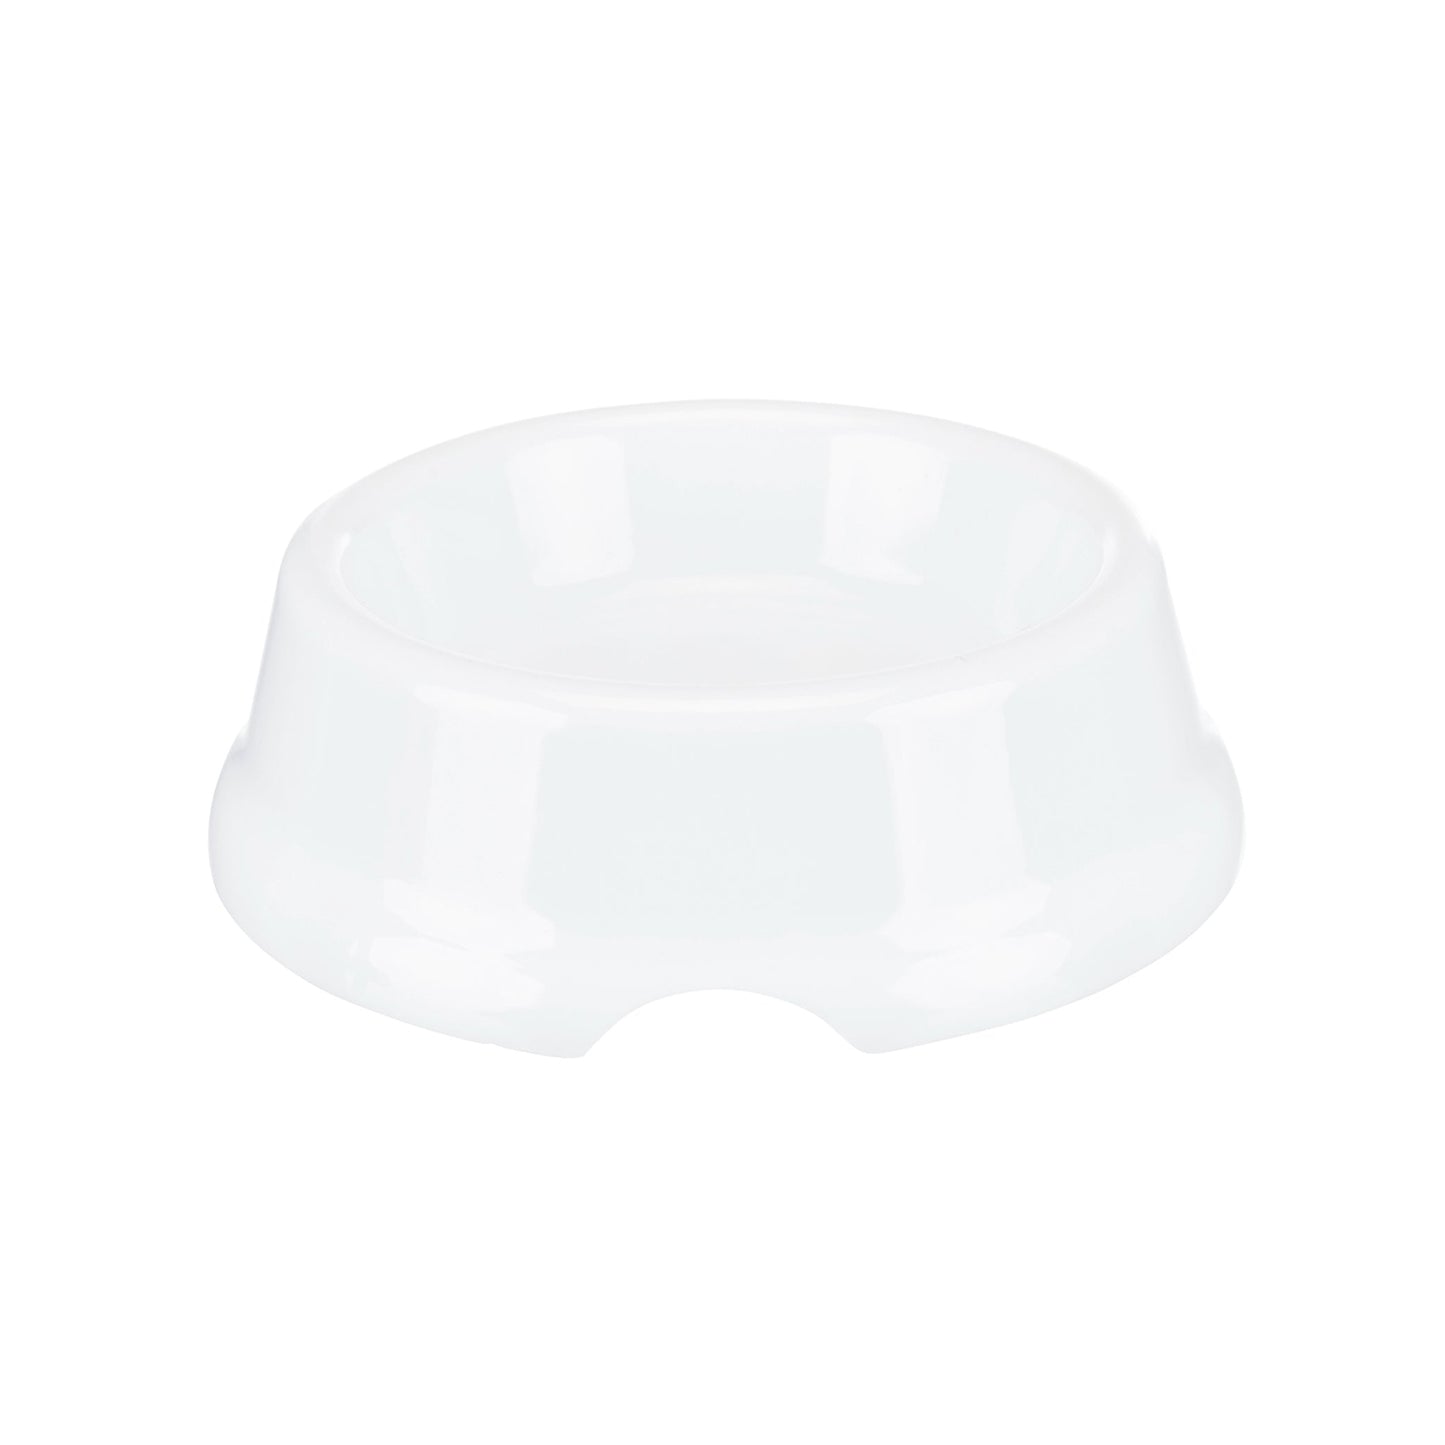 Trixie - Plastic Bowl for Dogs Non-Slip